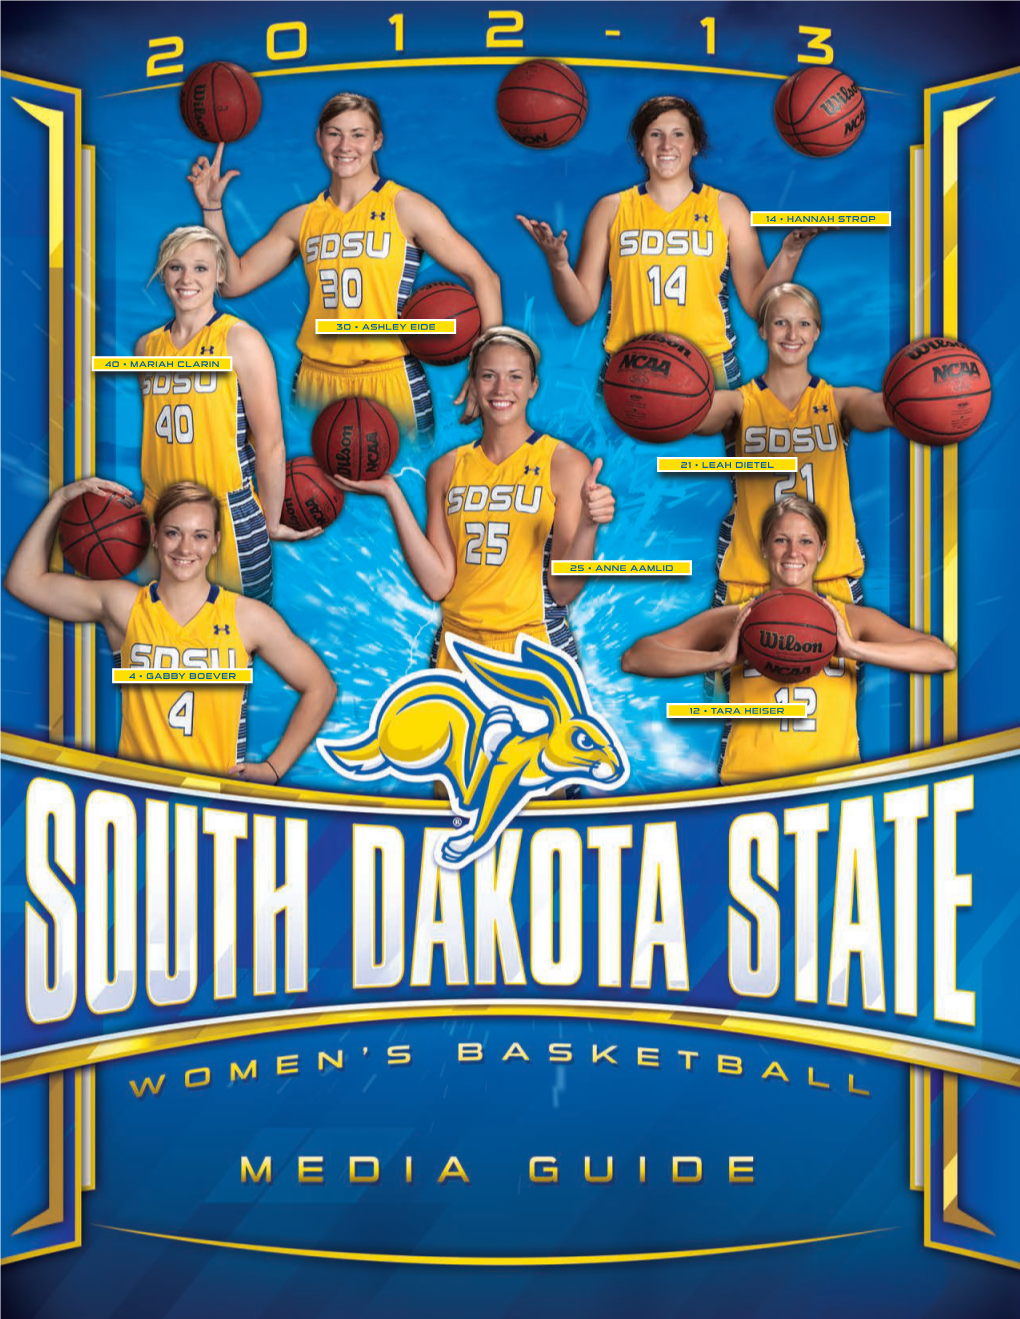 2012-13 South Dakota State Women's Basketball Media Guide